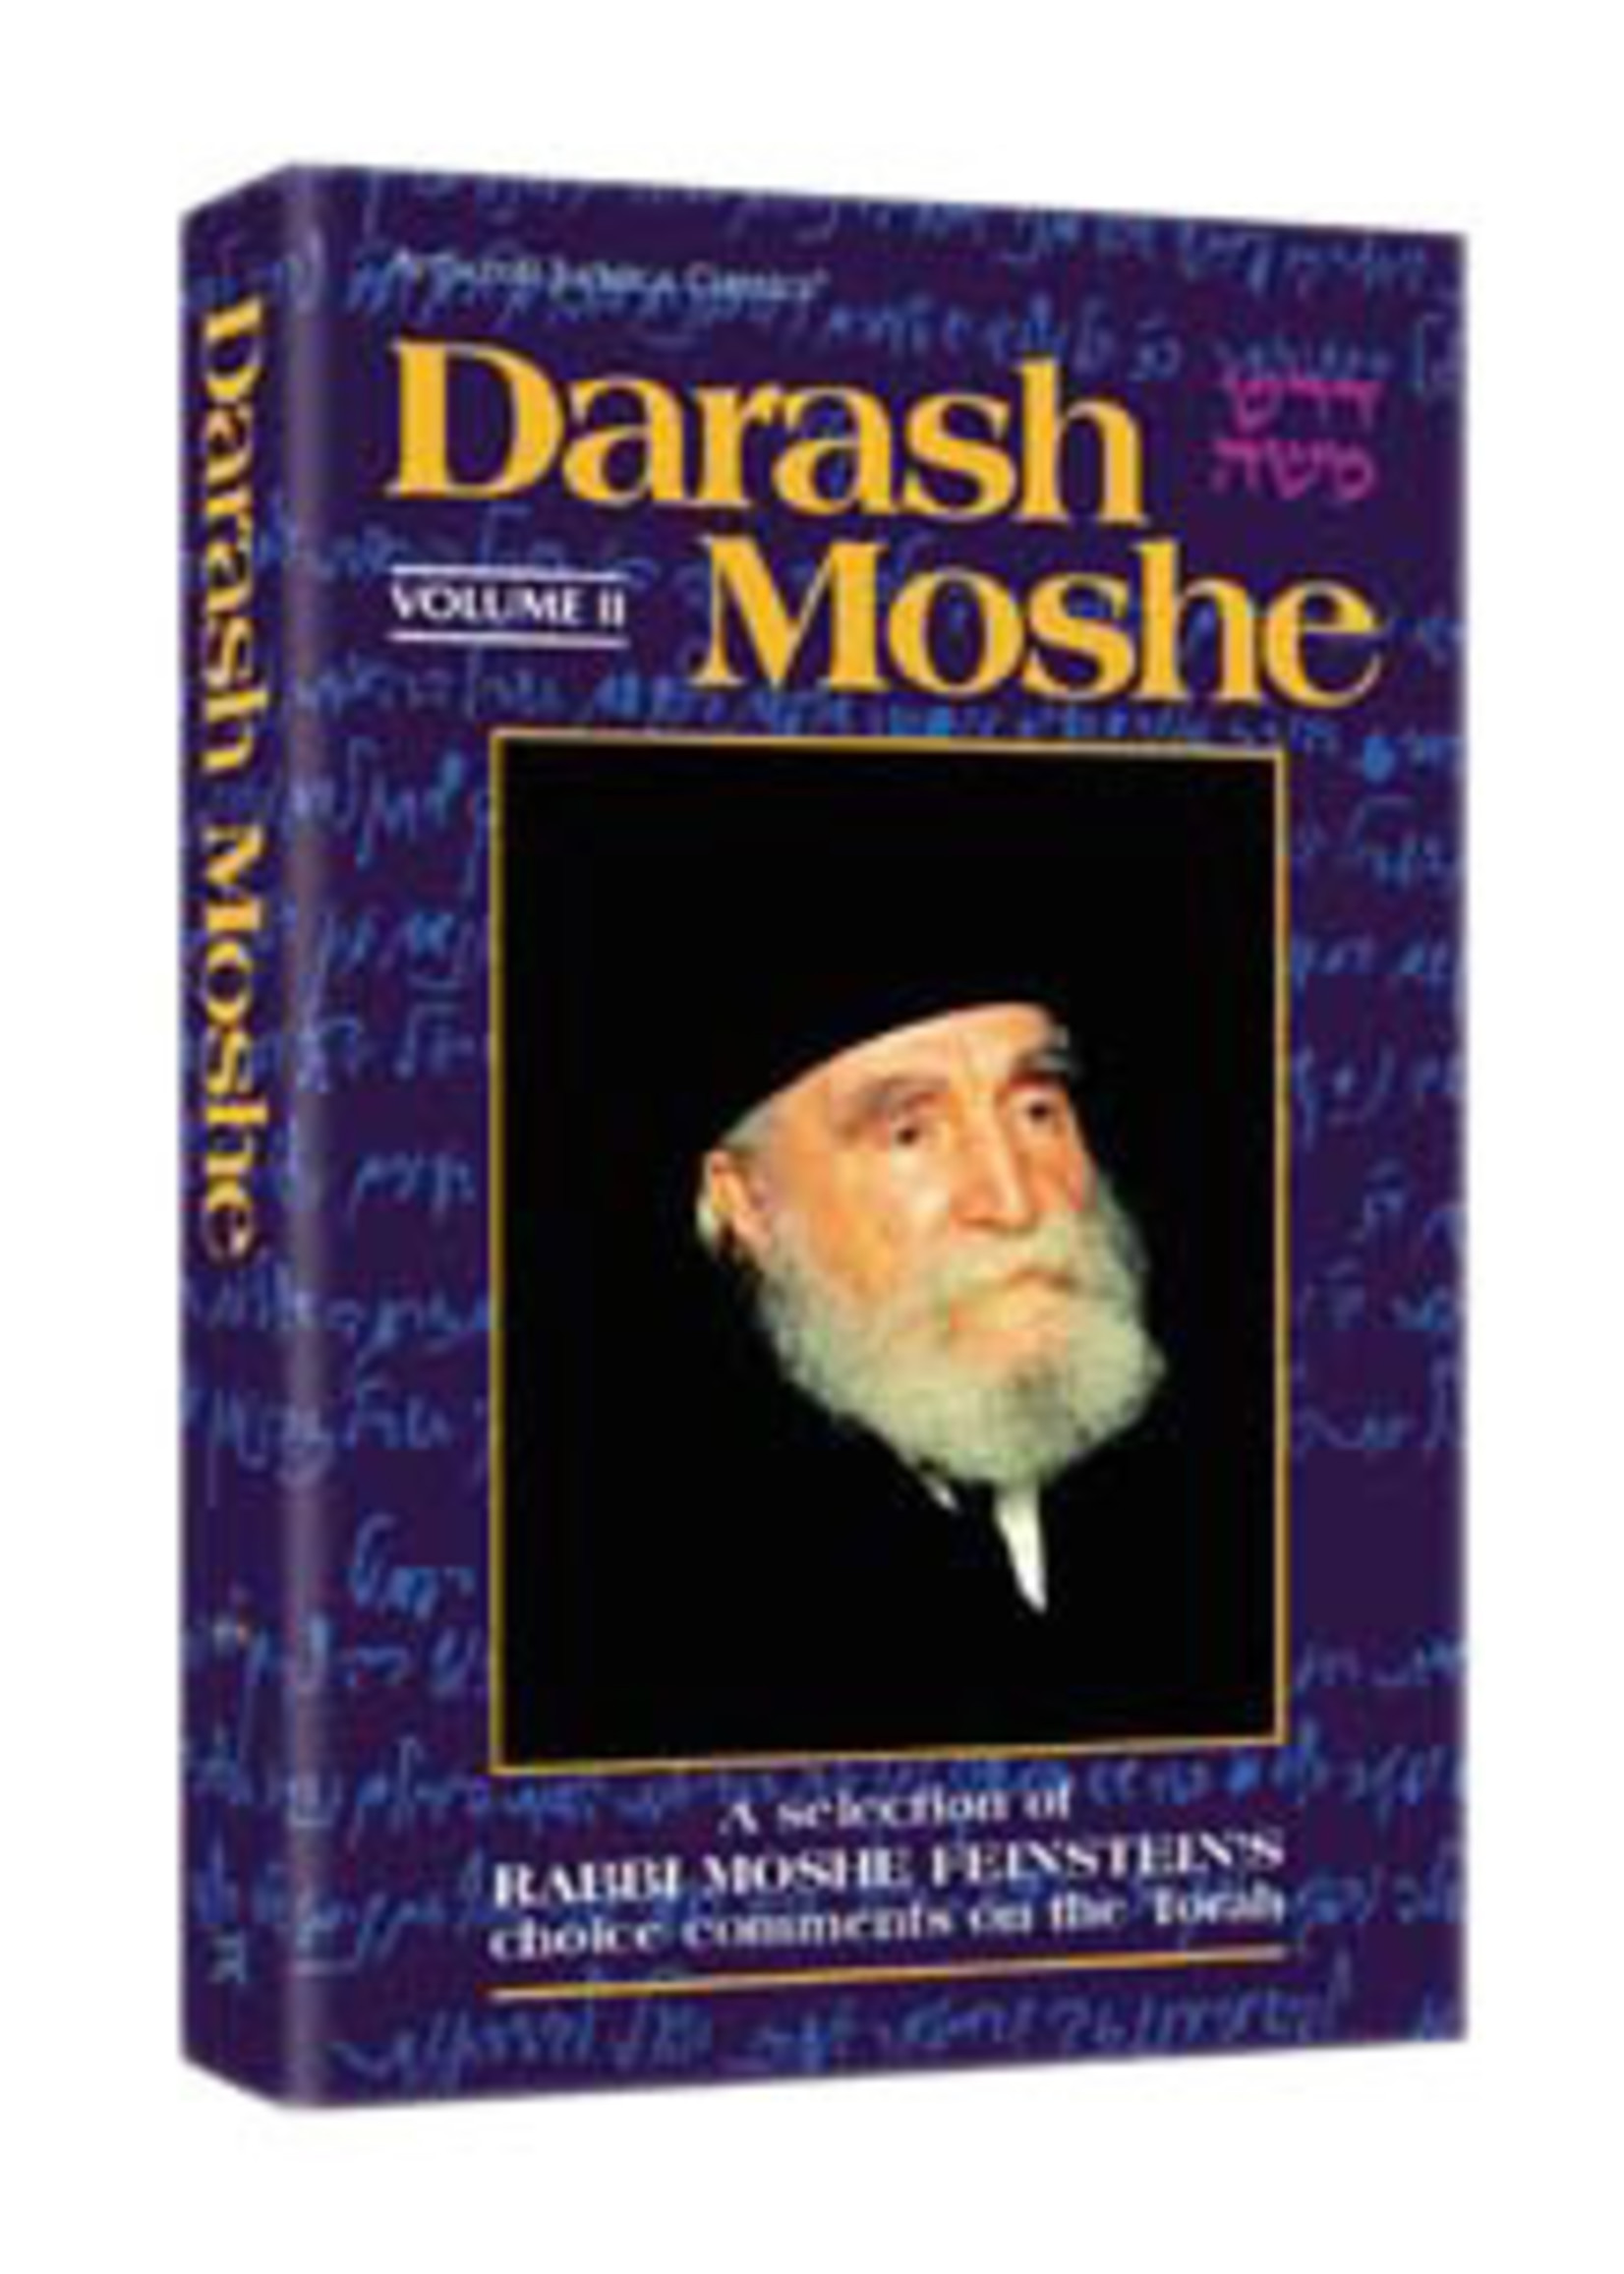 DARASH MOSHE VOL 2 H/C